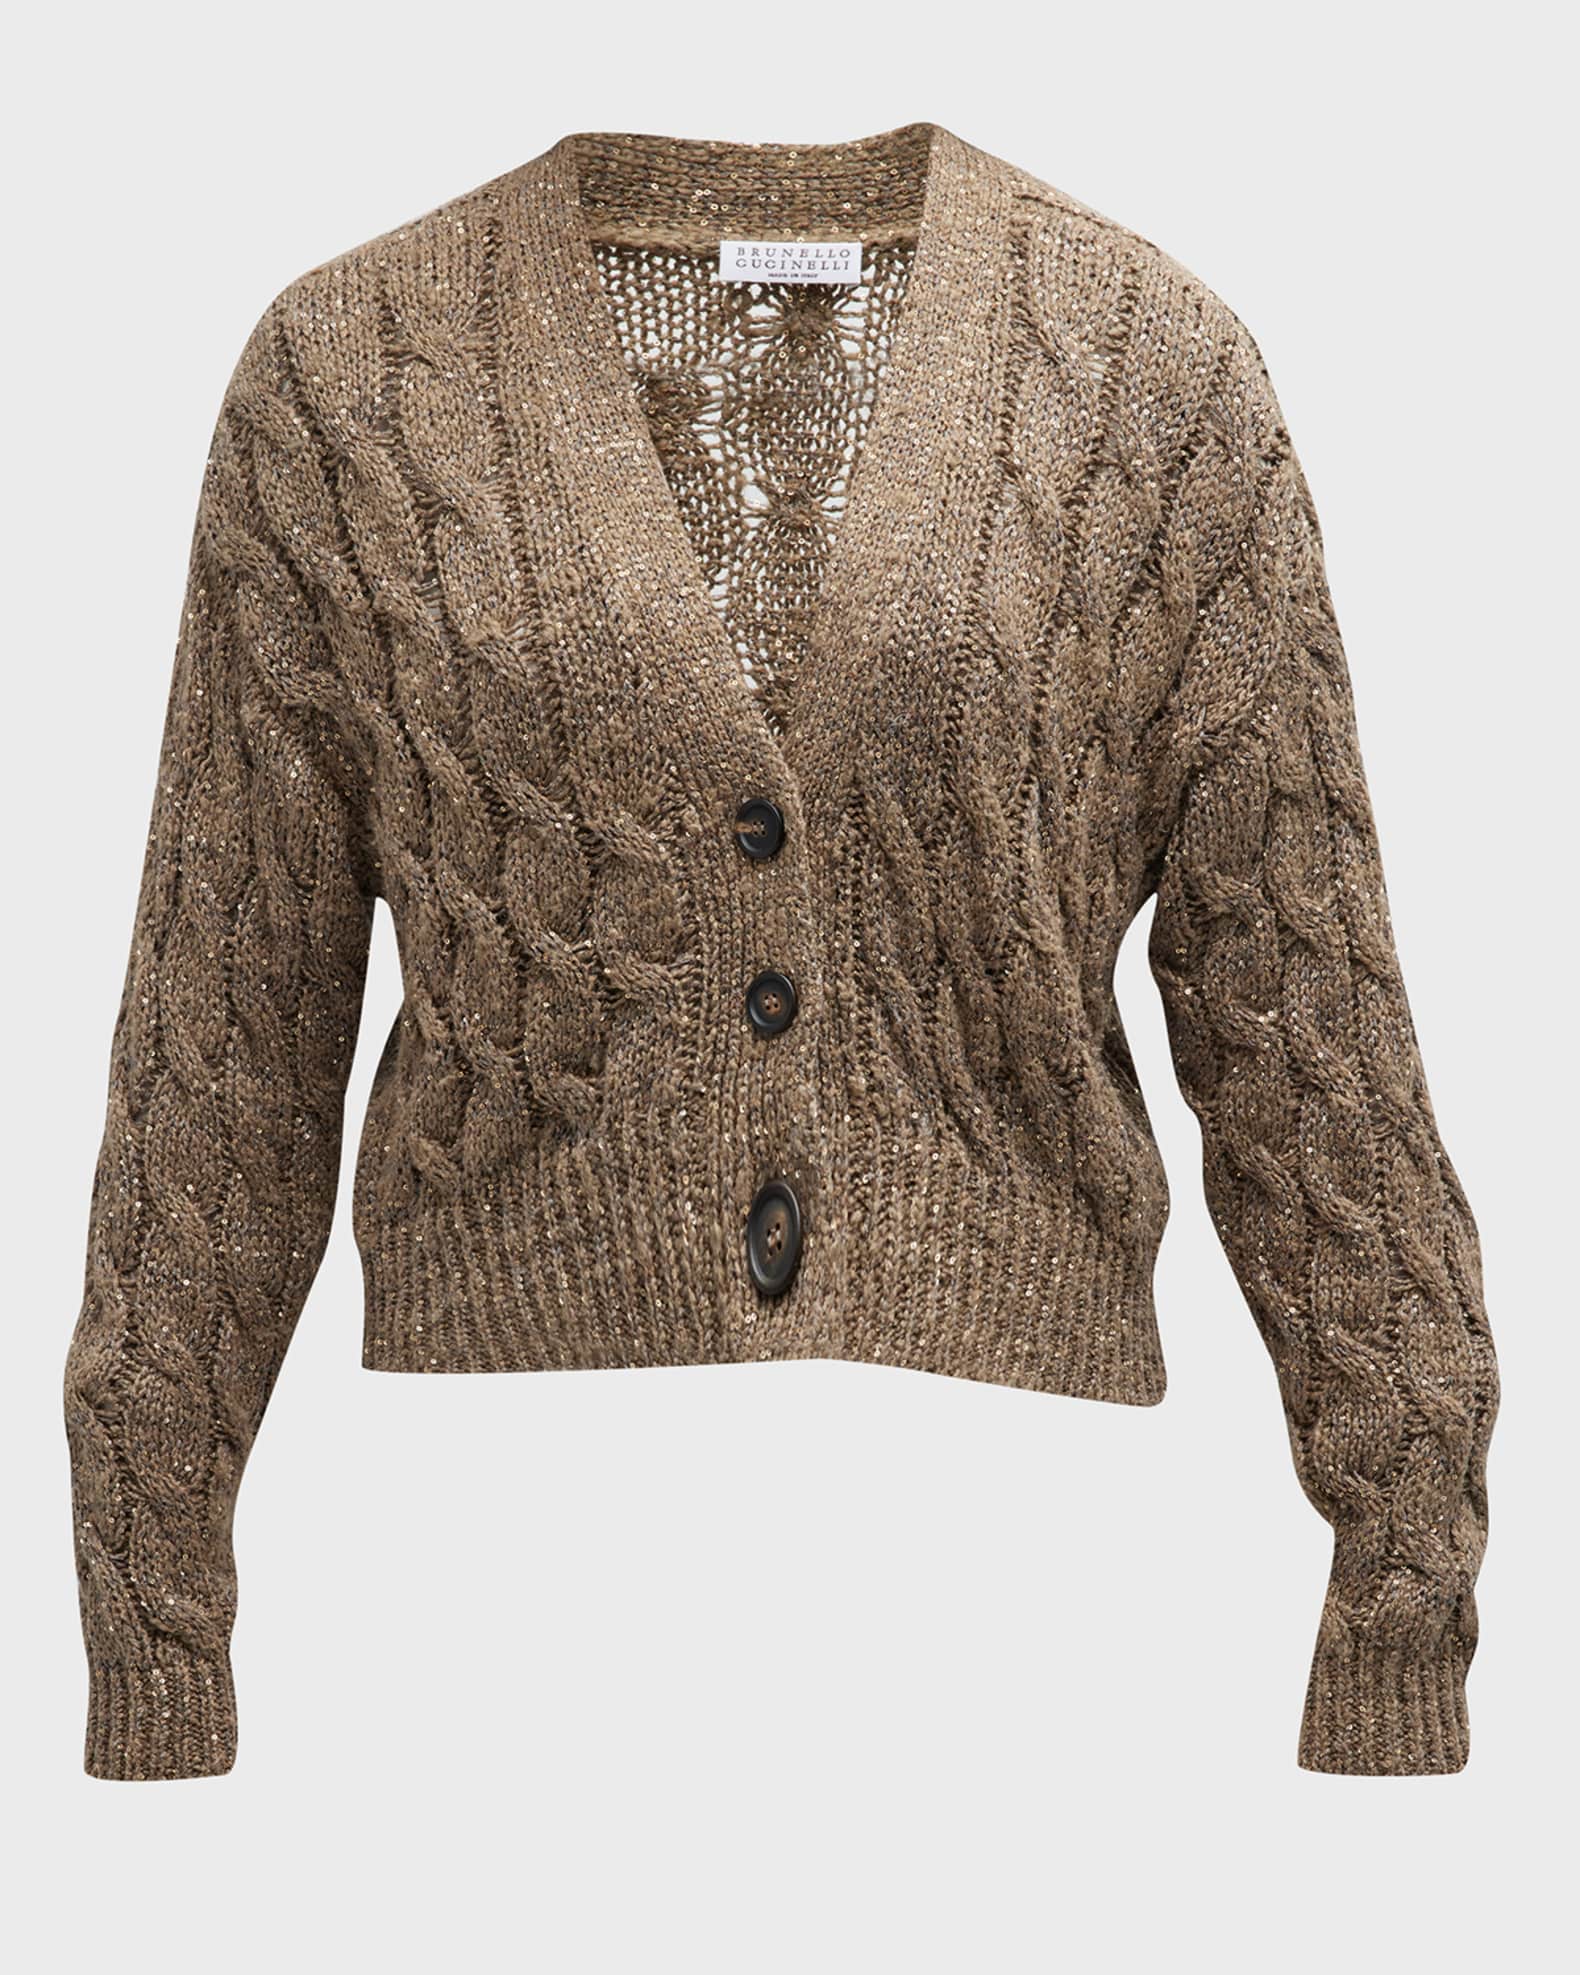 Louis Vuitton Crochet Knit Cropped Cardigan